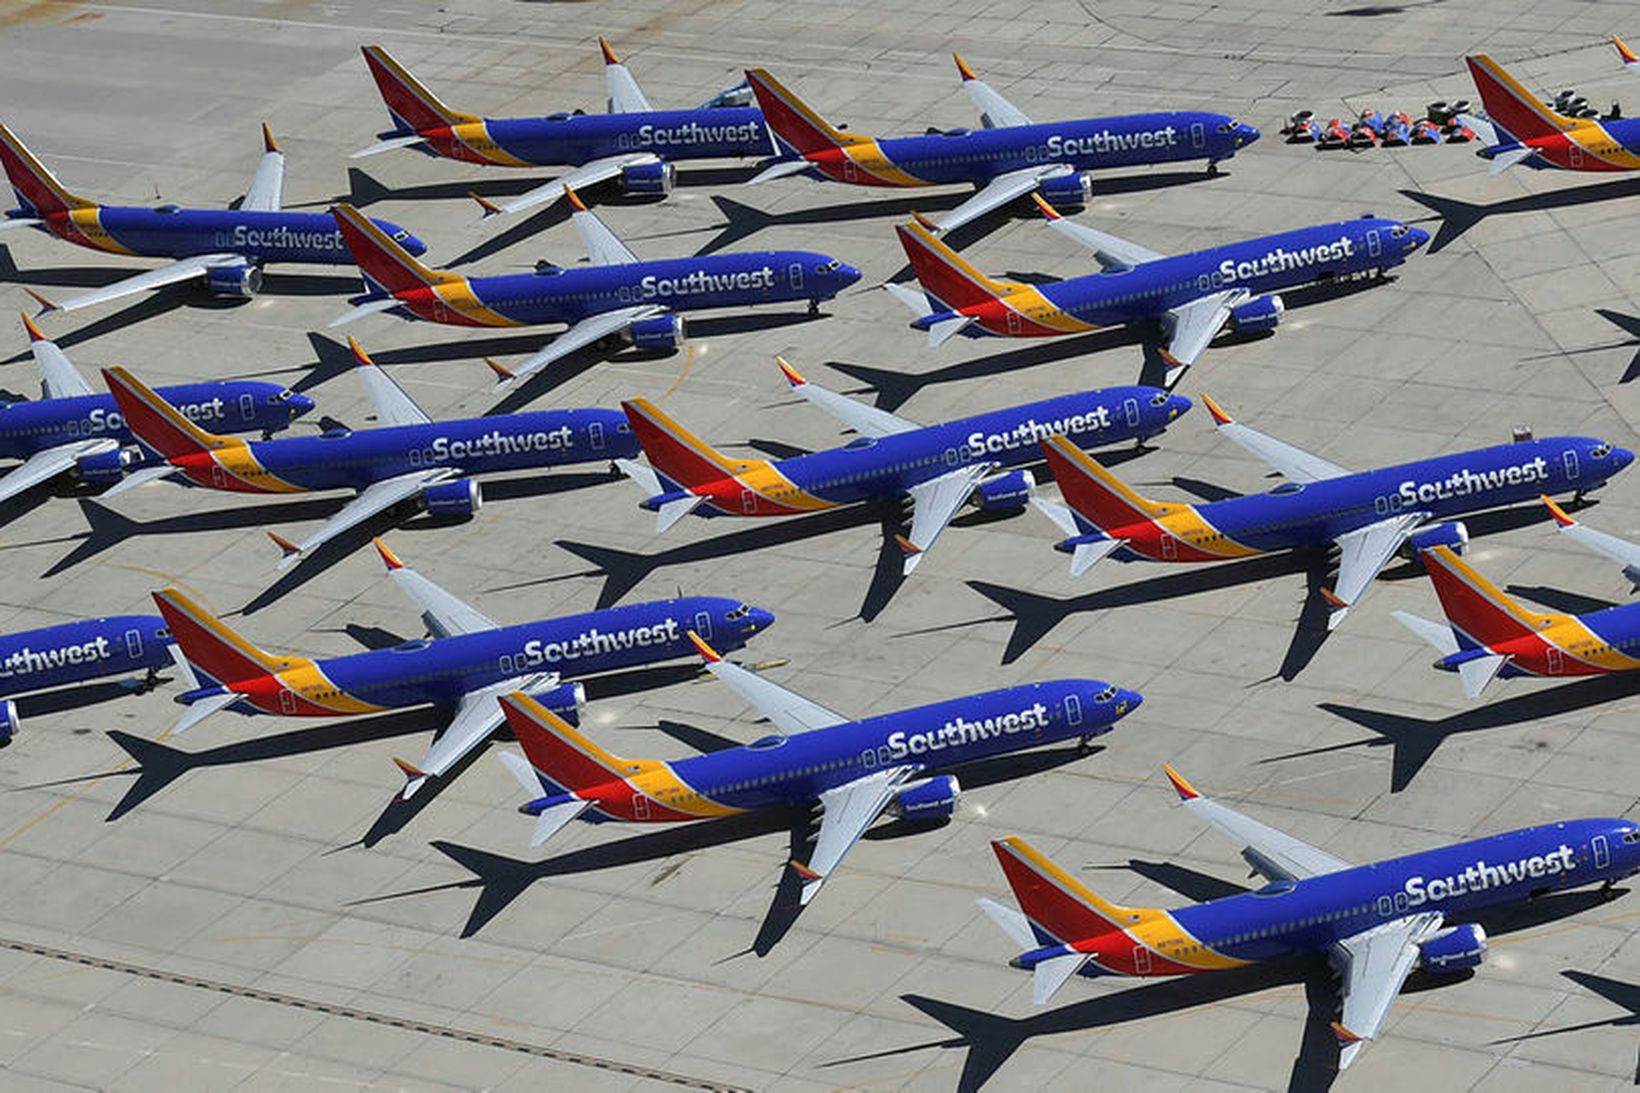 Hluti kyrrsettra Boeing 737 MAX flugvéla Southwest Airlines kyrrsettur á …